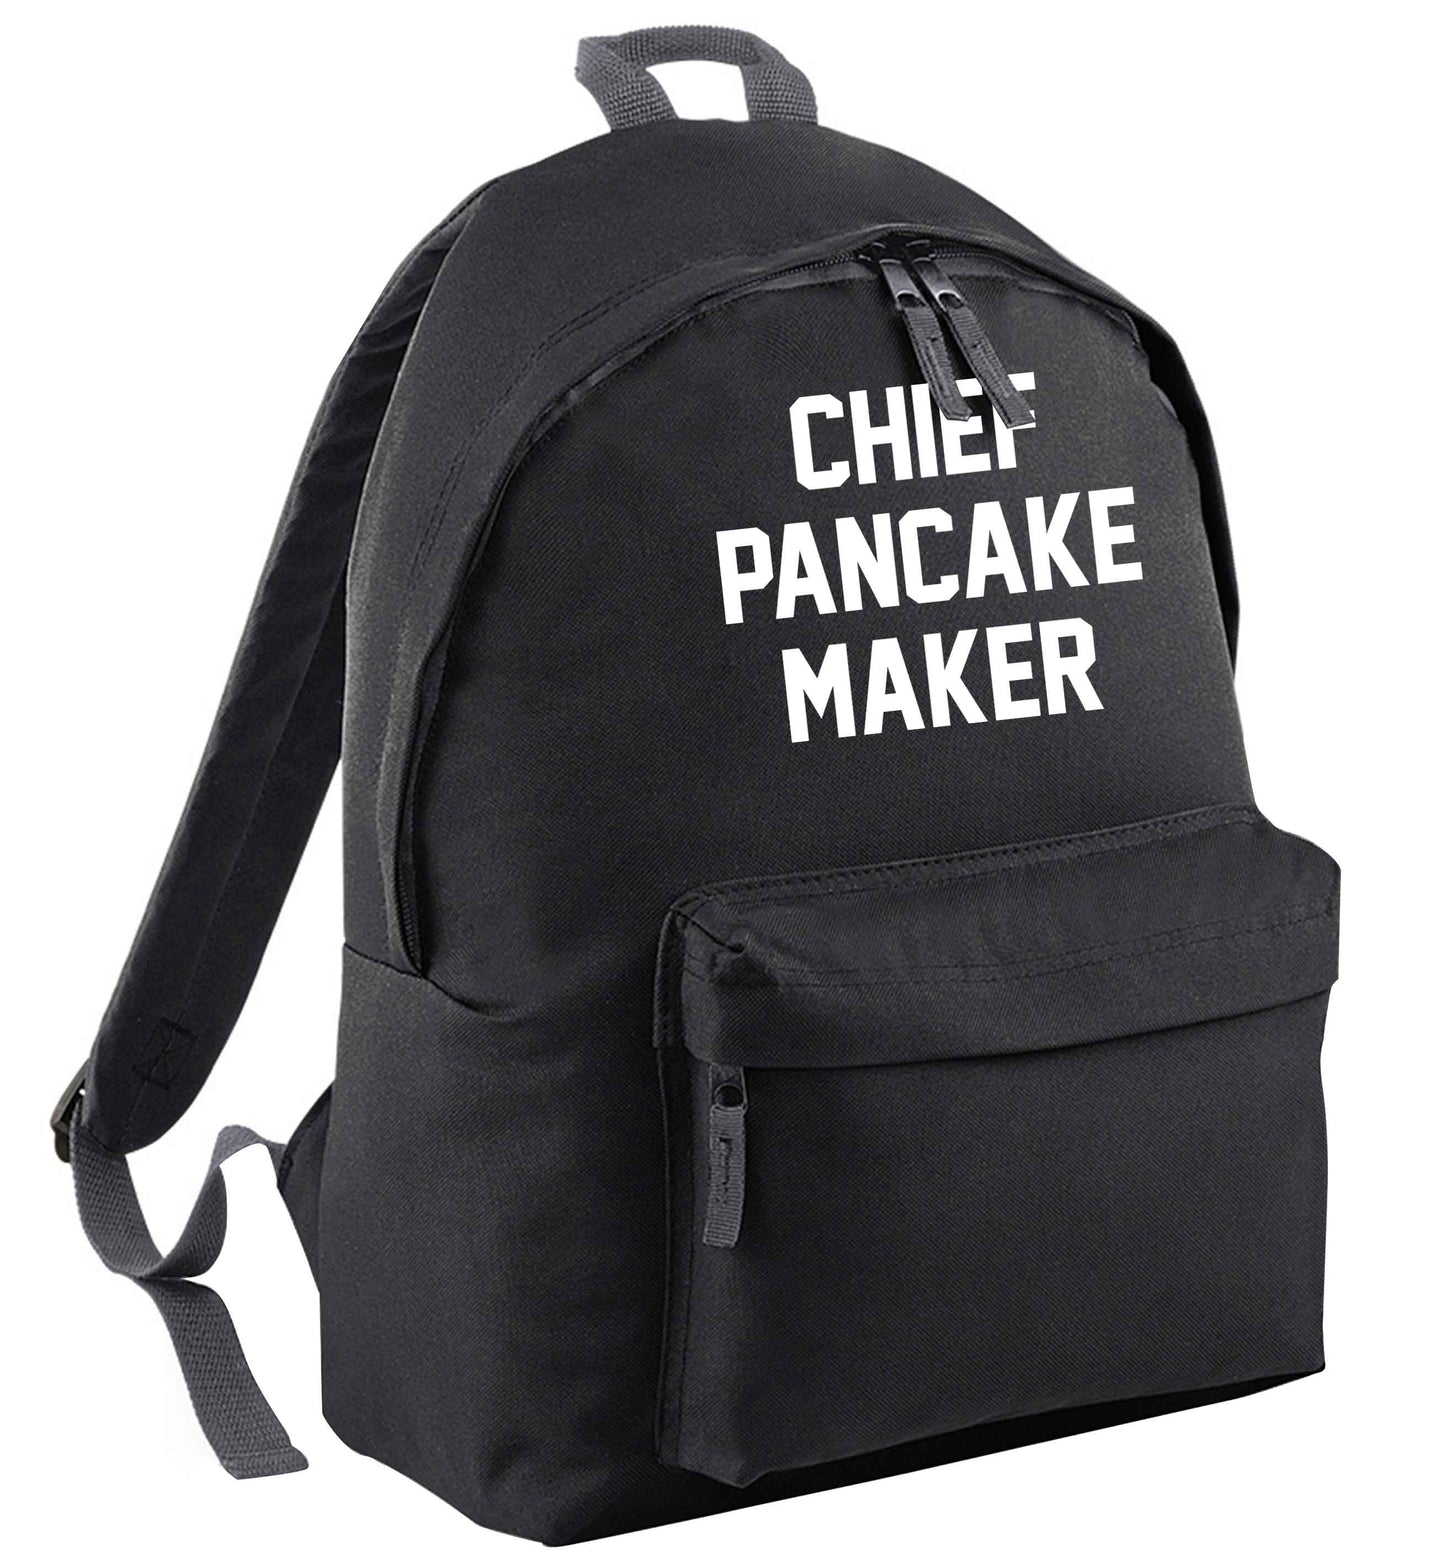 Chief pancake maker | Children's backpack